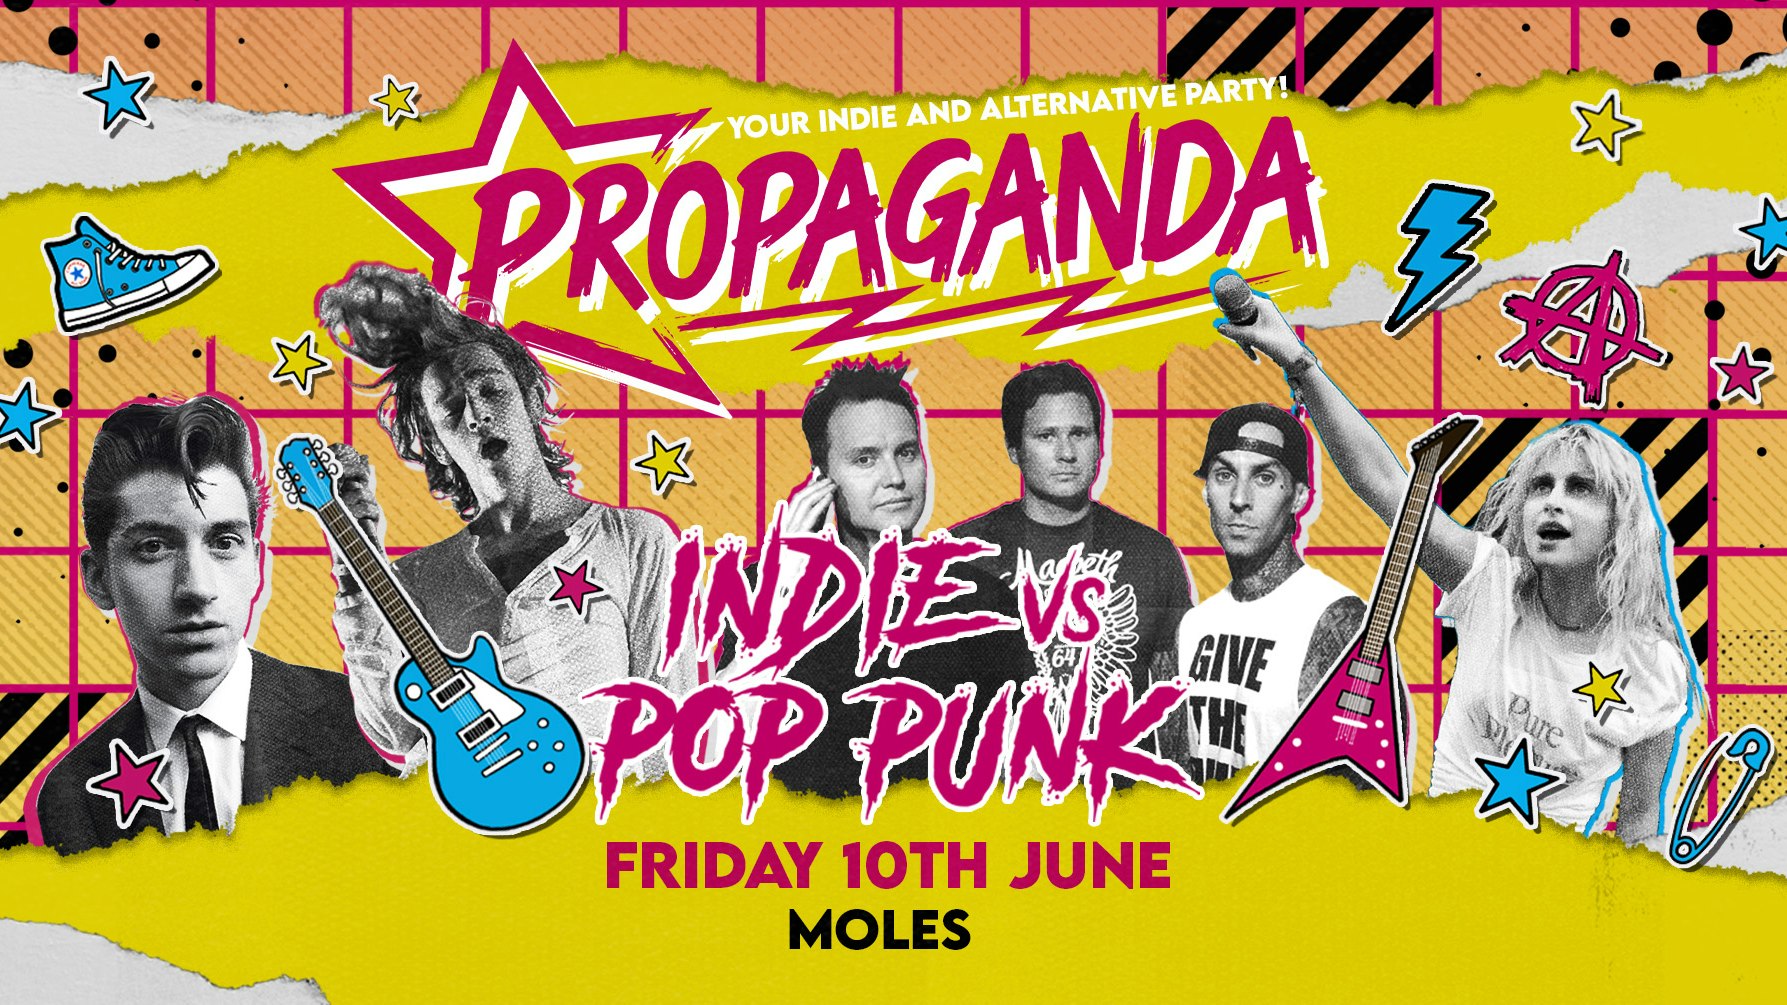 Propaganda Bath – Indie VS Pop-Punk!